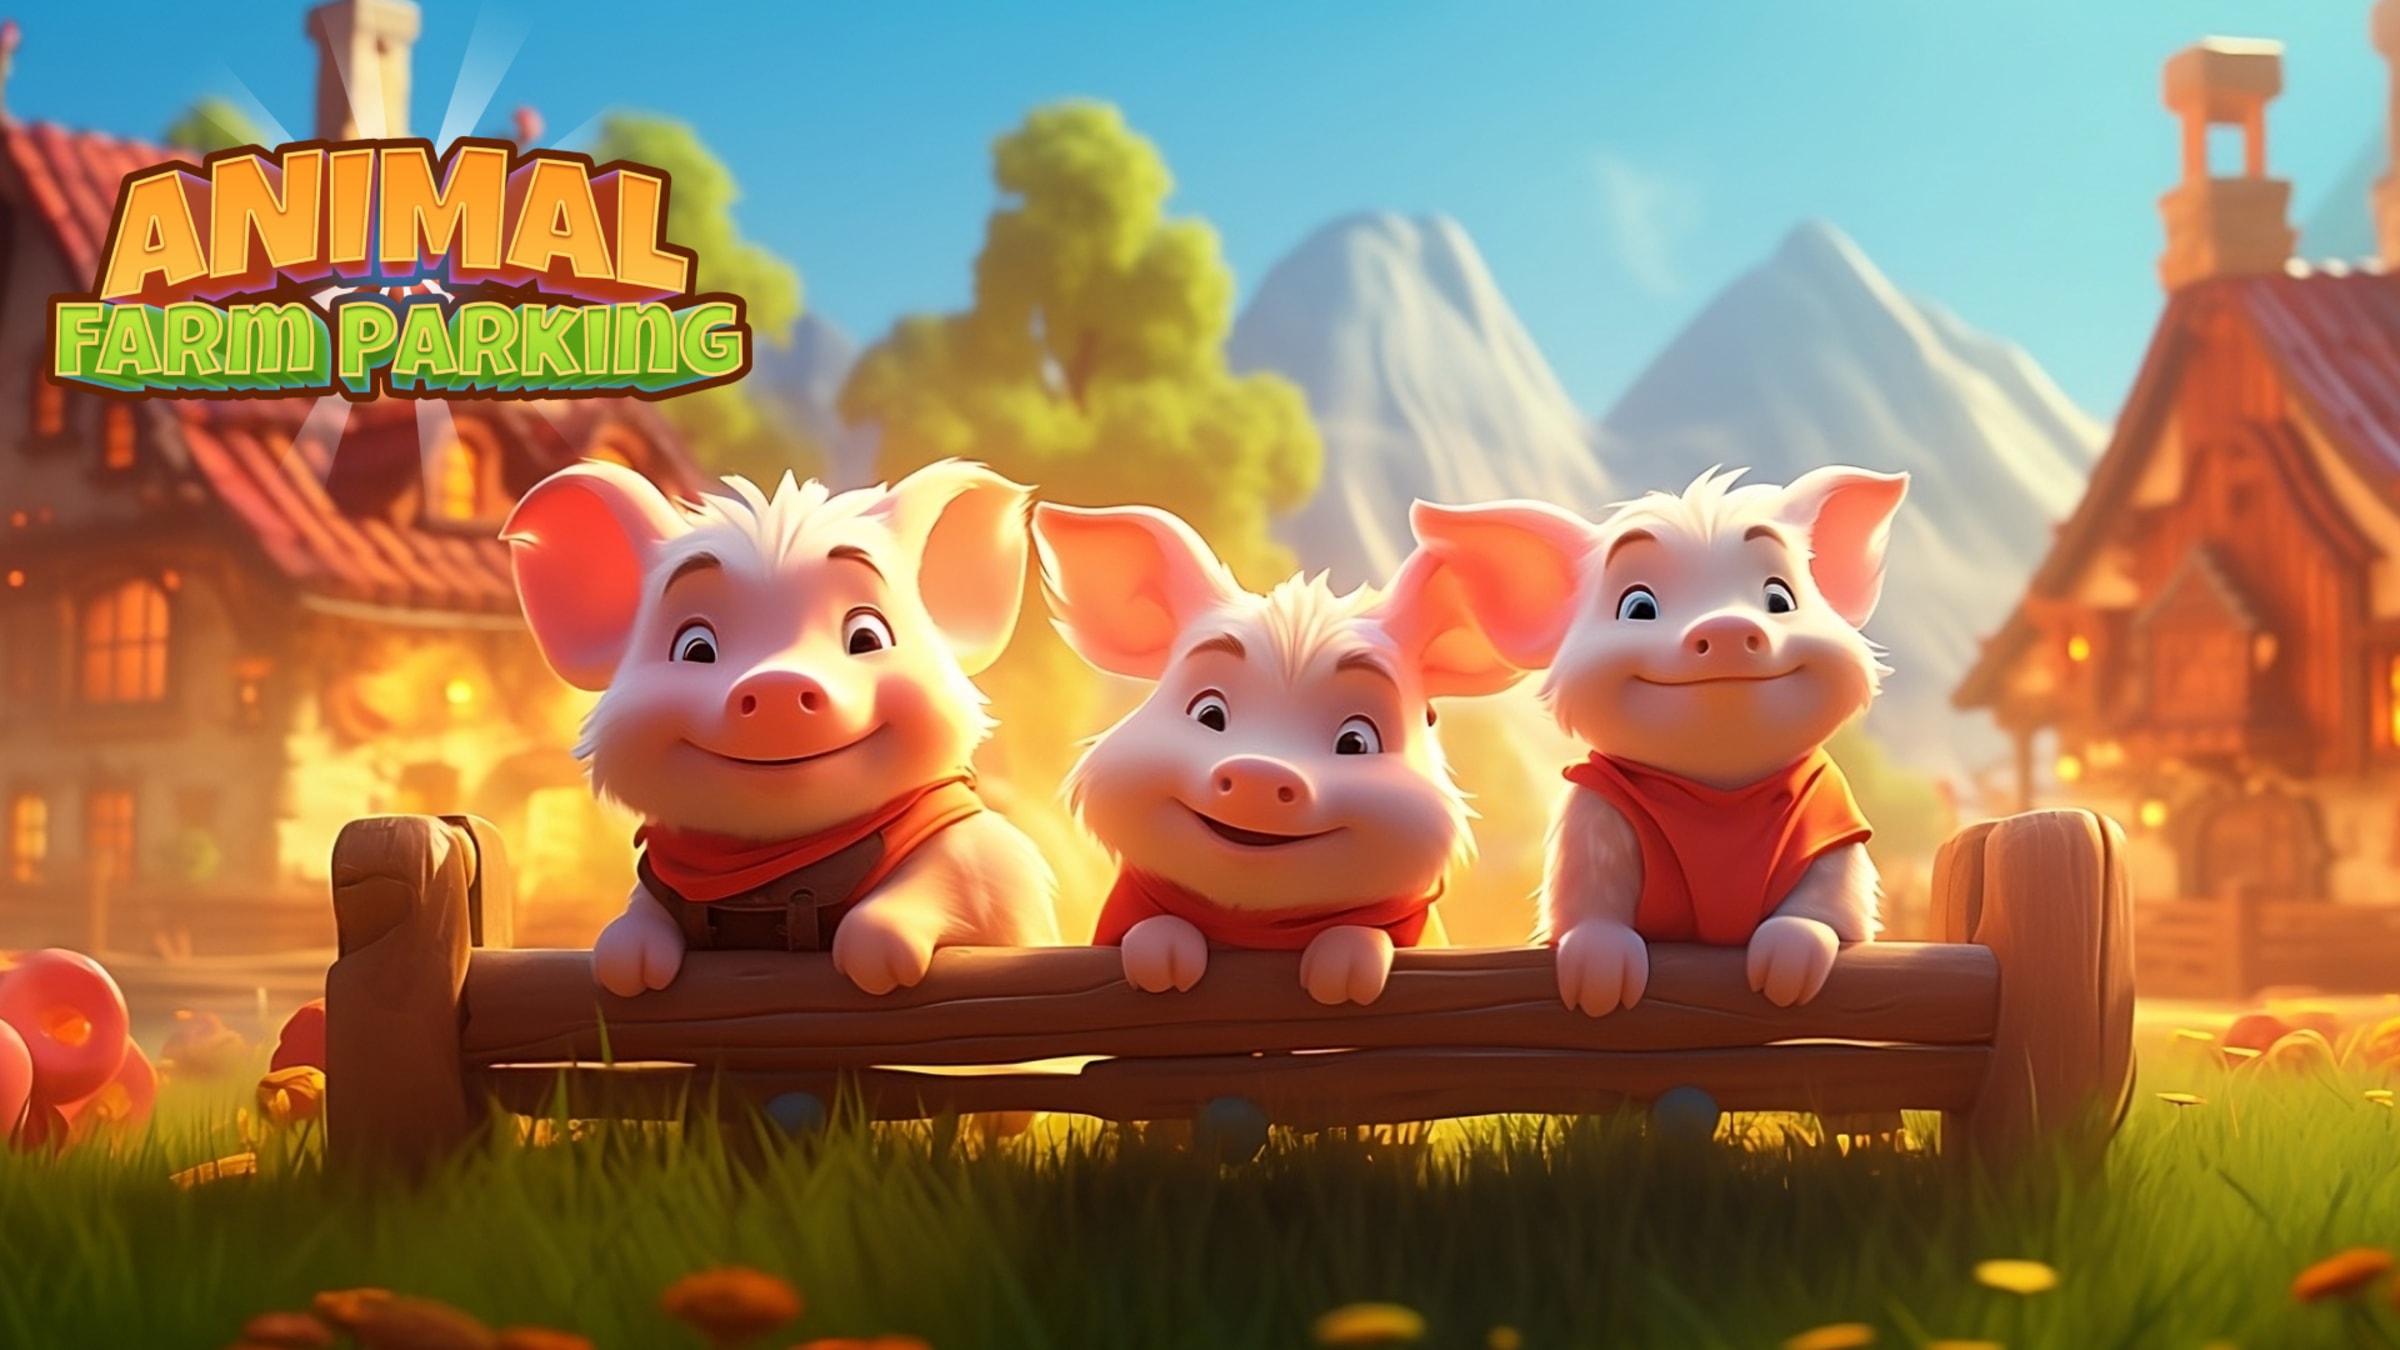 Animal farm 2 the three little pigs